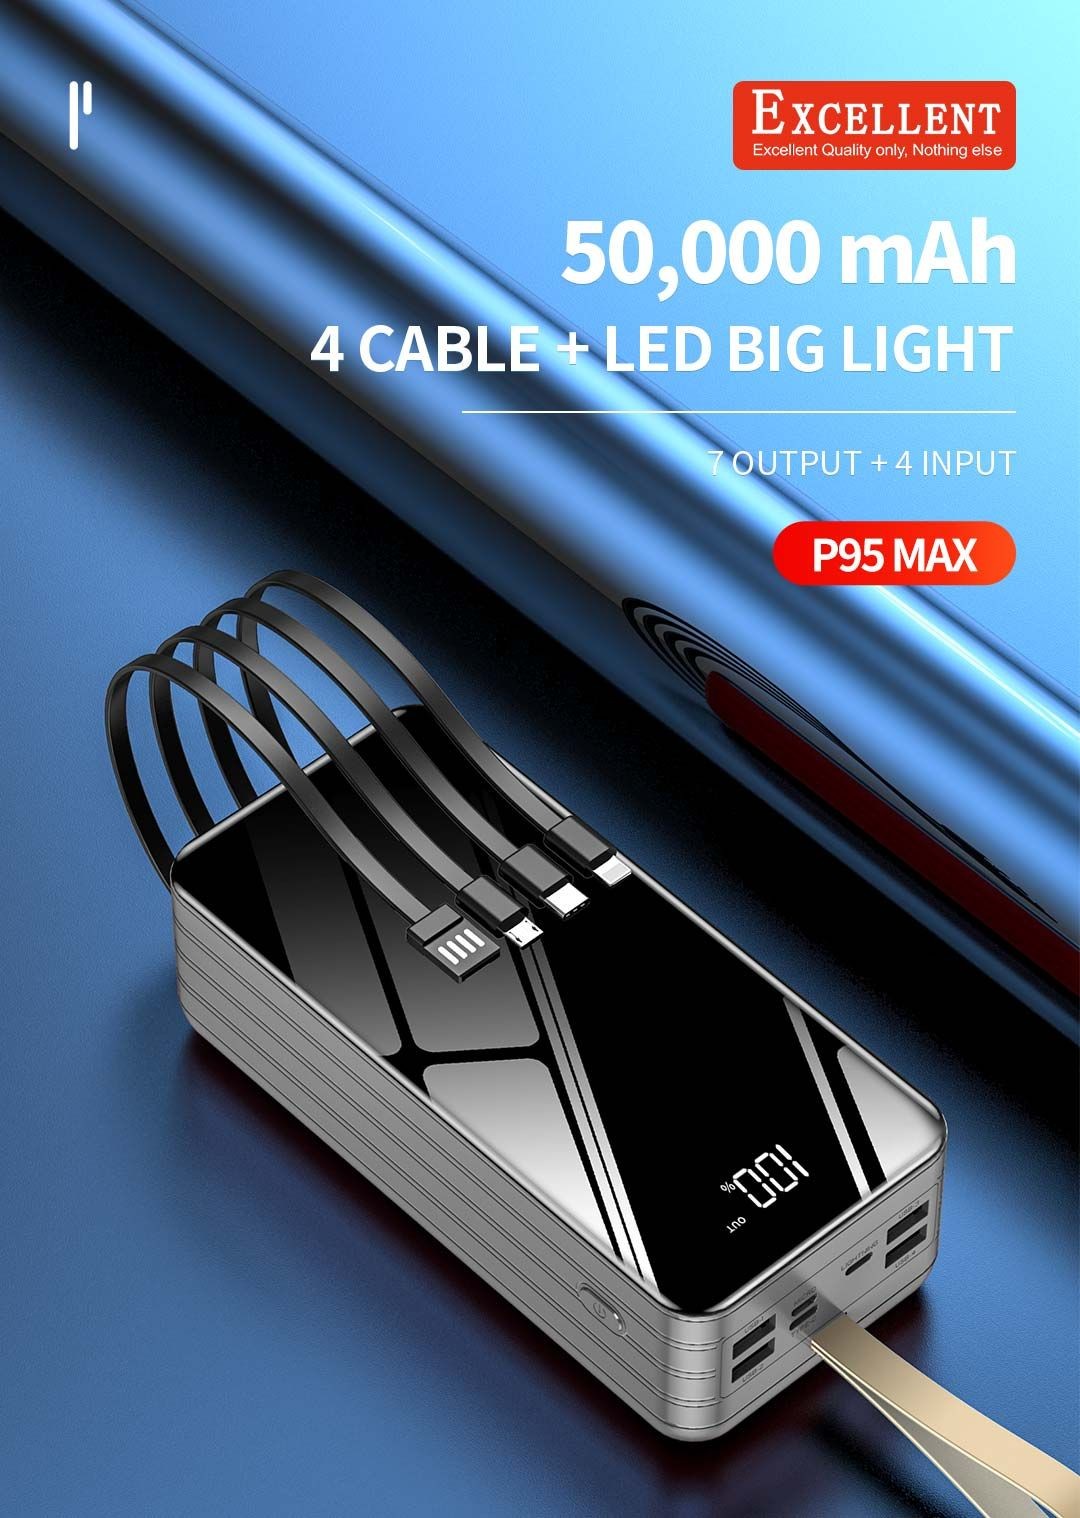 EXCELLENT P95 max 50,000mAh power bank